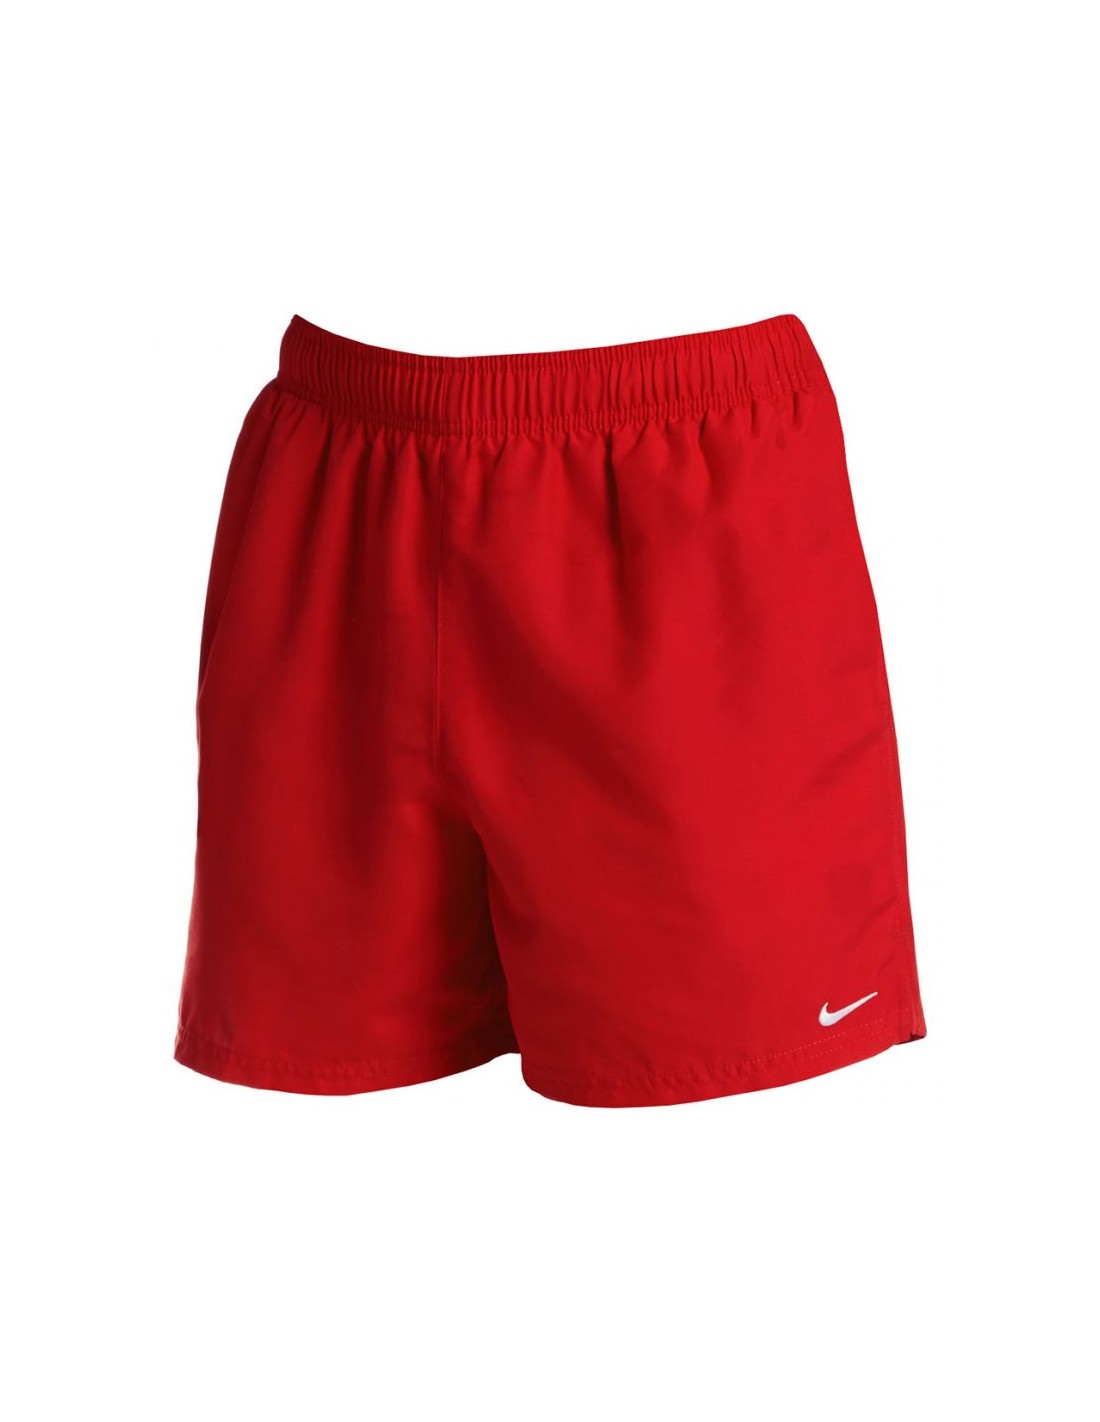 Nike 7 Volley NESSA559 shorts 614 M swimming